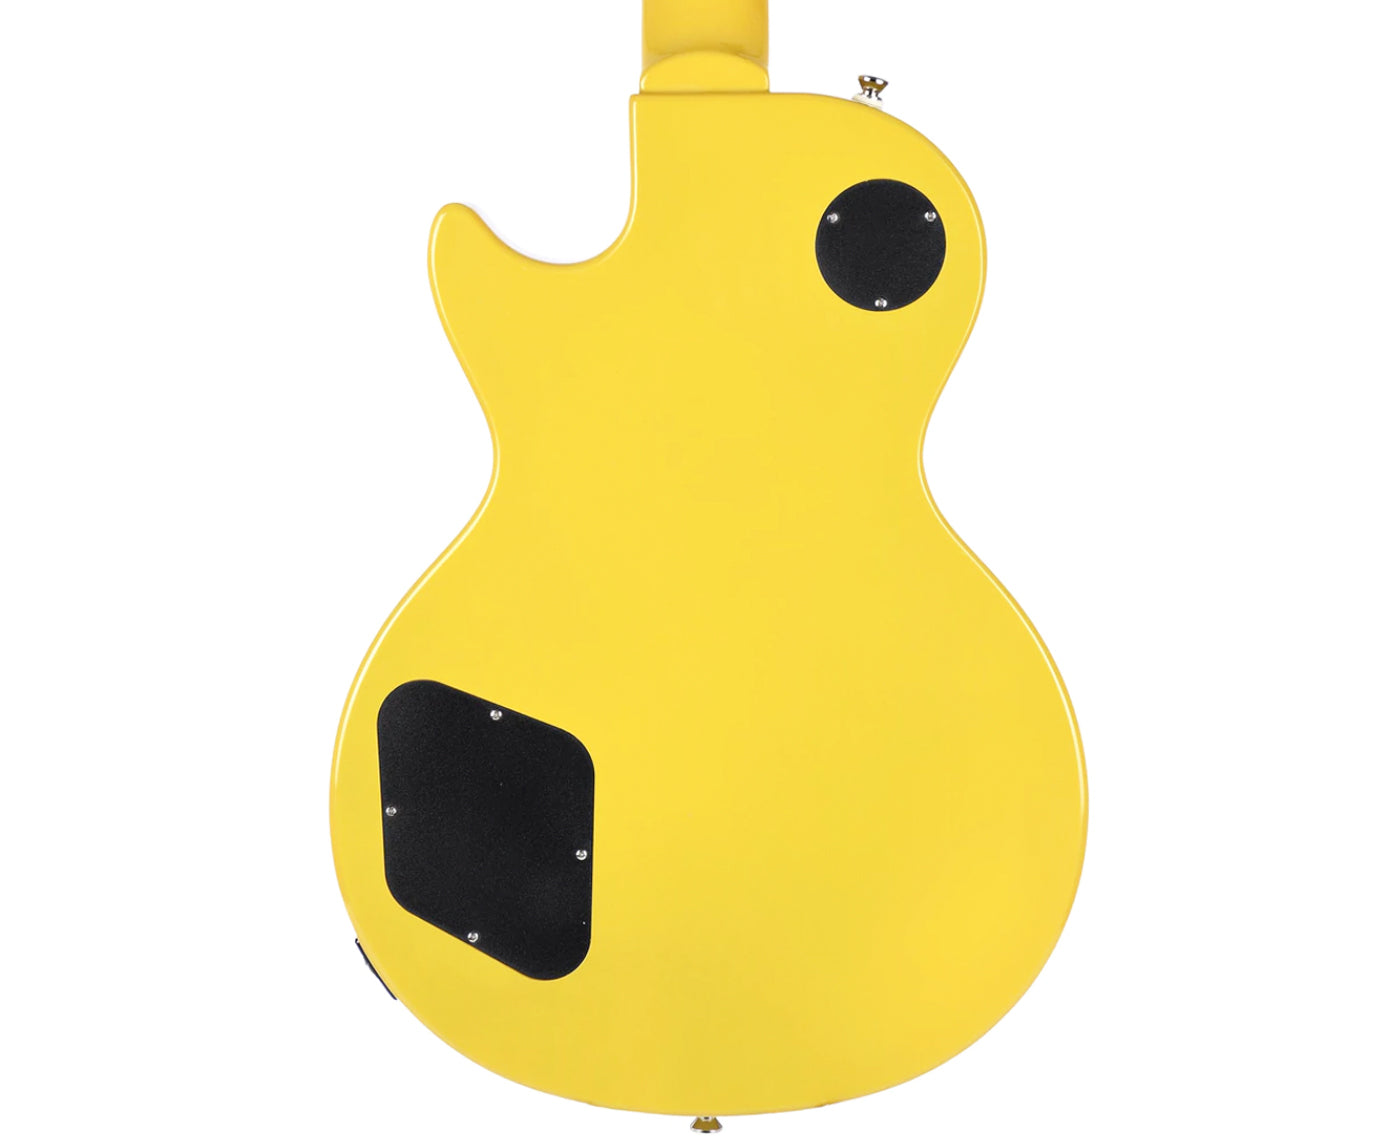 Epiphone Les Paul Special Electric Guitar in TV Yellow – Megatone 